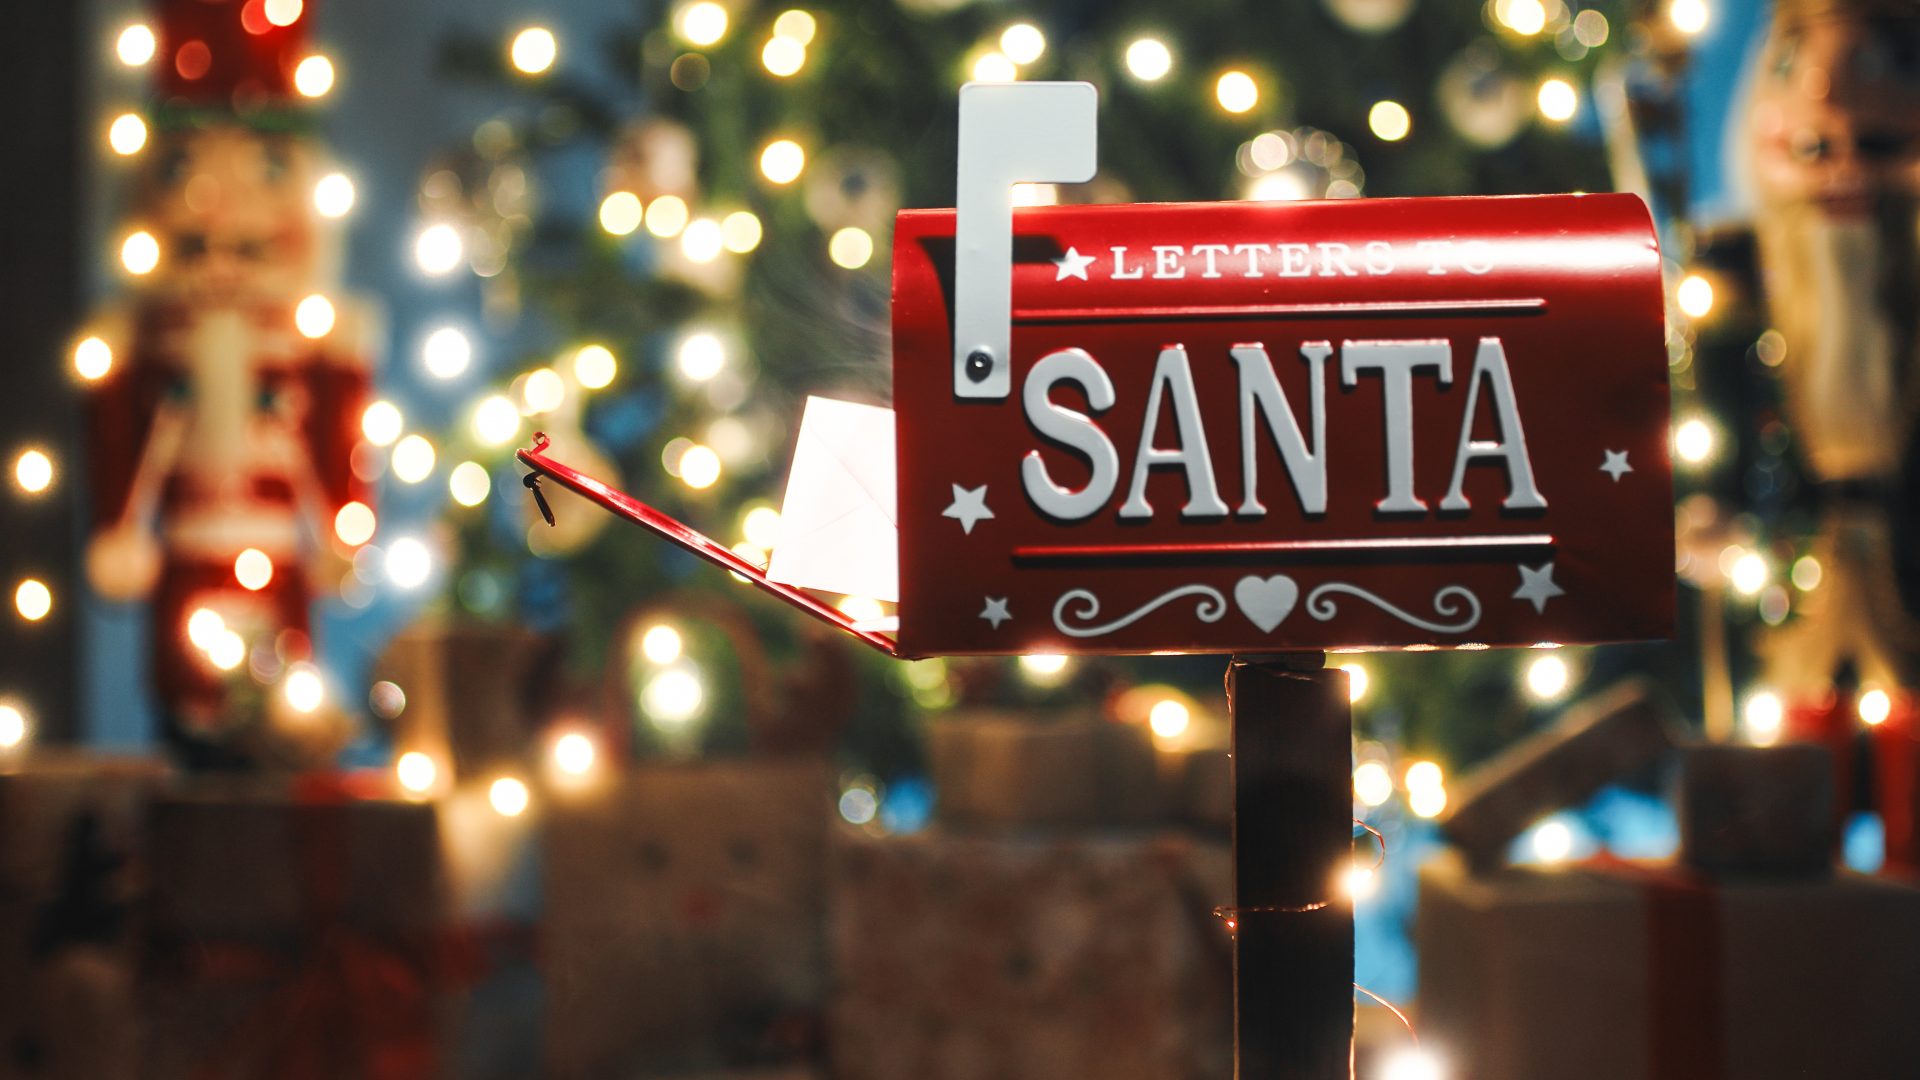 Santa Claus red mailbox under Christmas tree